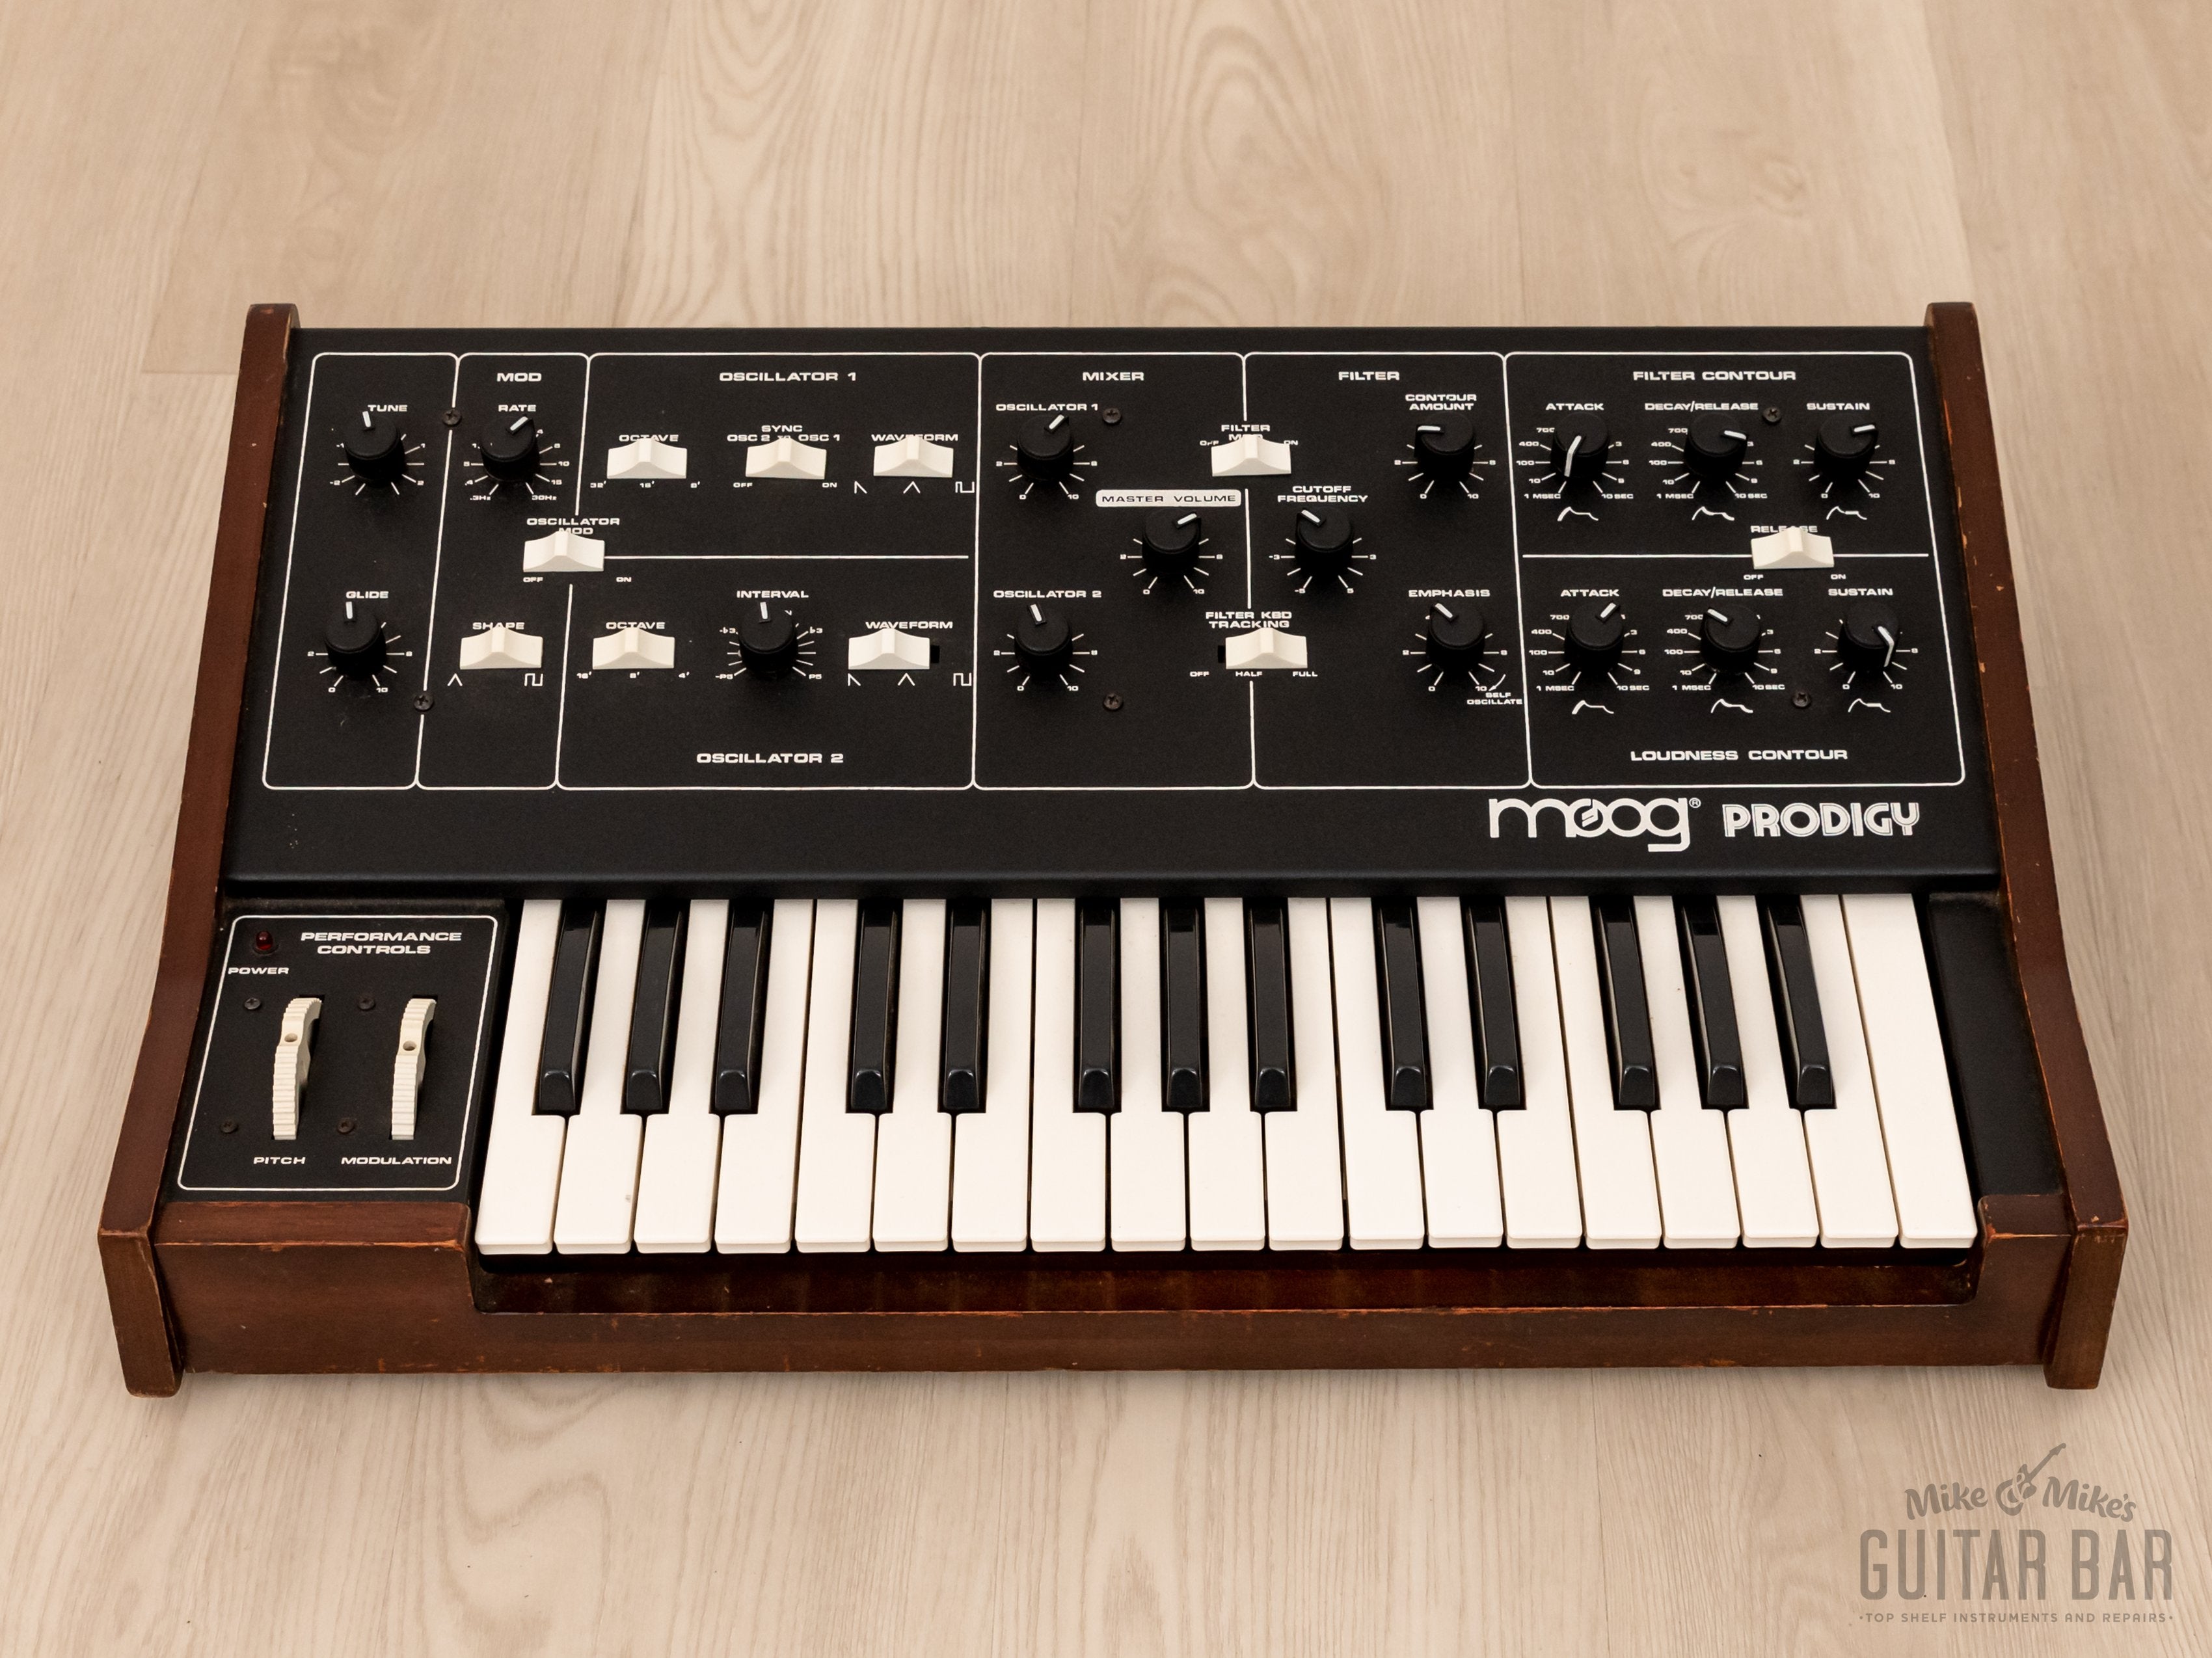 1983 Moog Prodigy Vintage Analog Synthesizer w/ External Control, C/V/Gate, Fully Serviced